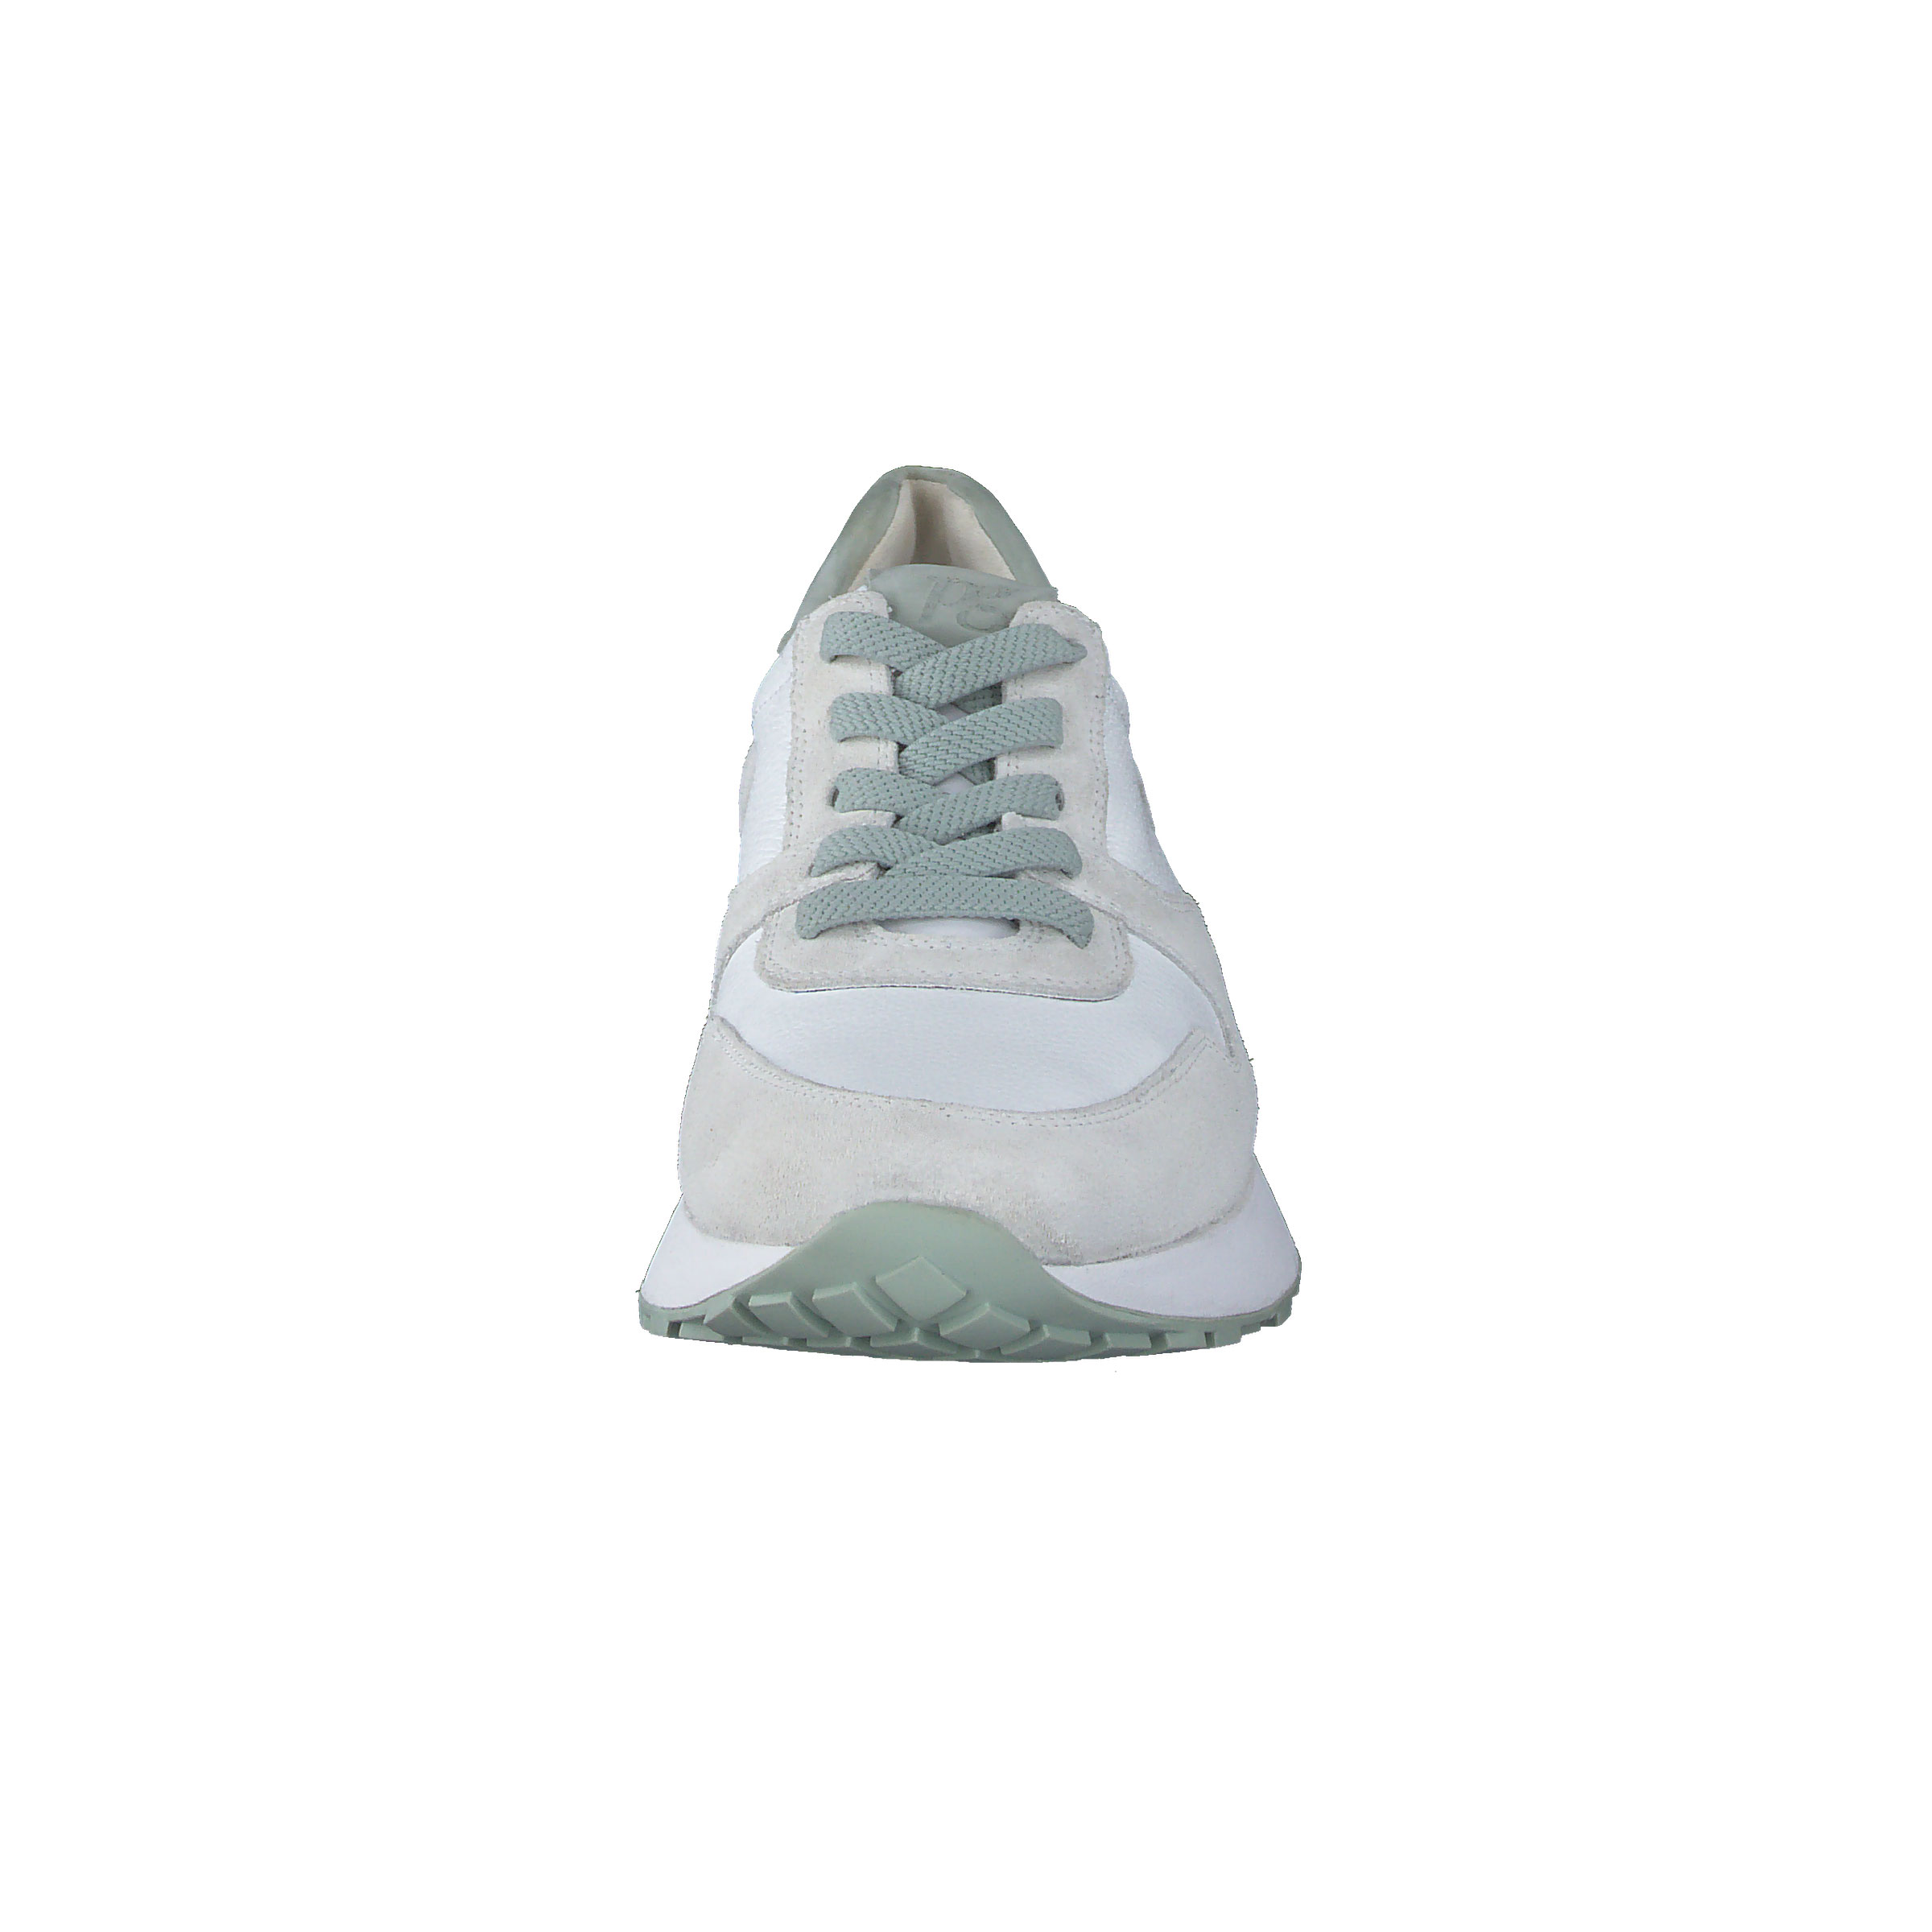 Paul Green Sneaker - White / Mint Leather